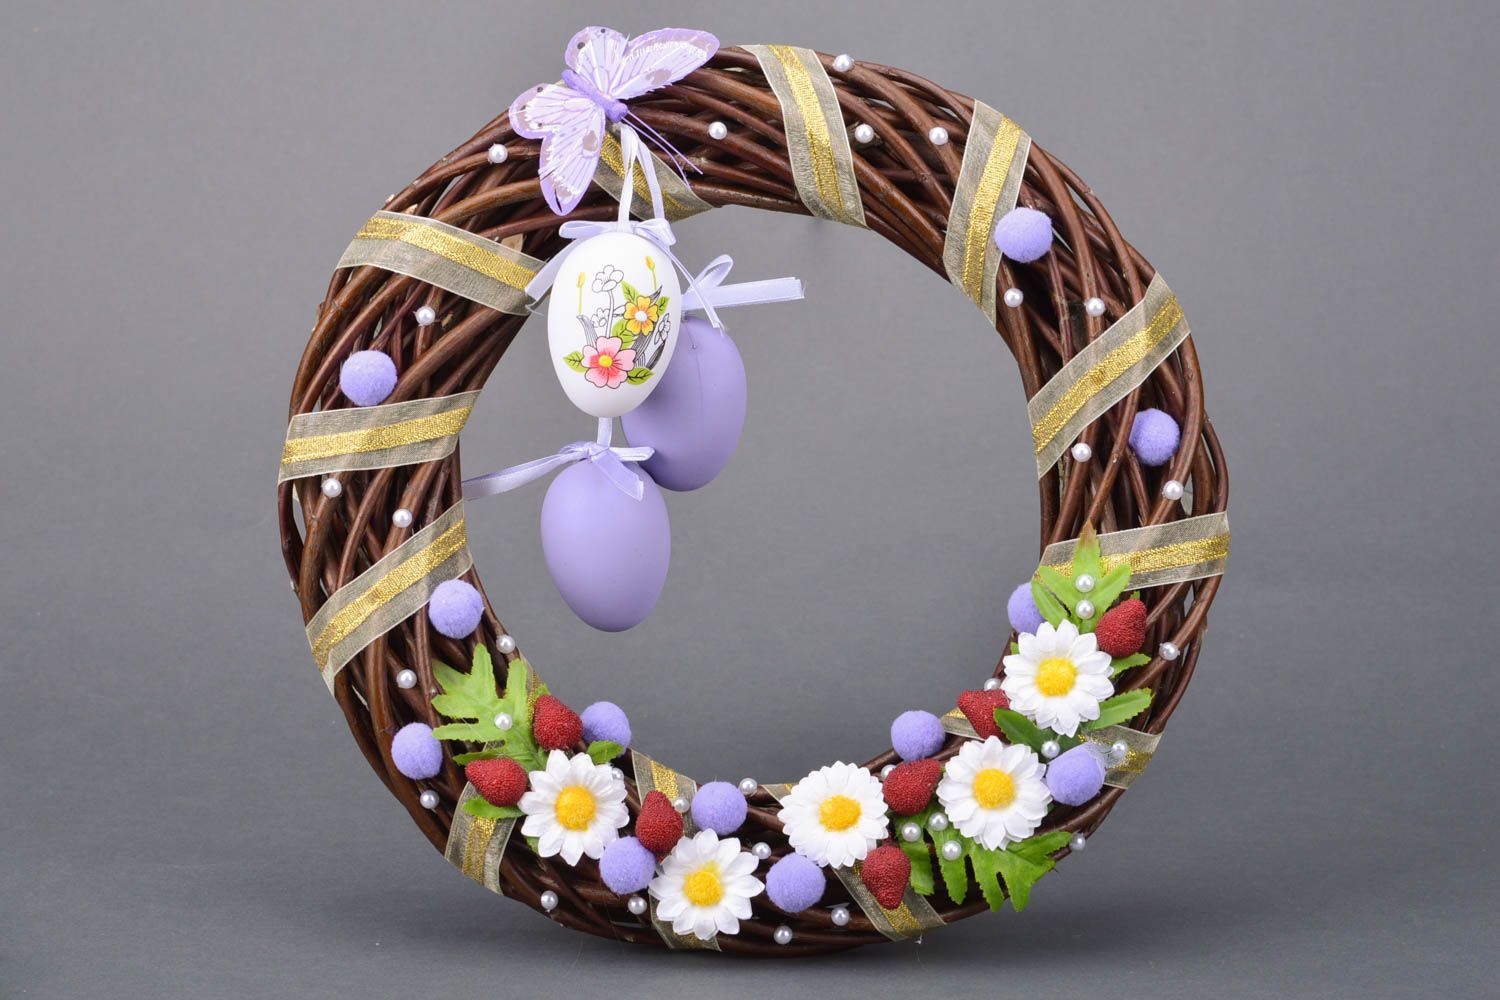 Handmade beautiful wicker handmade door wreath with eggs Easter decoration ideas photo 2